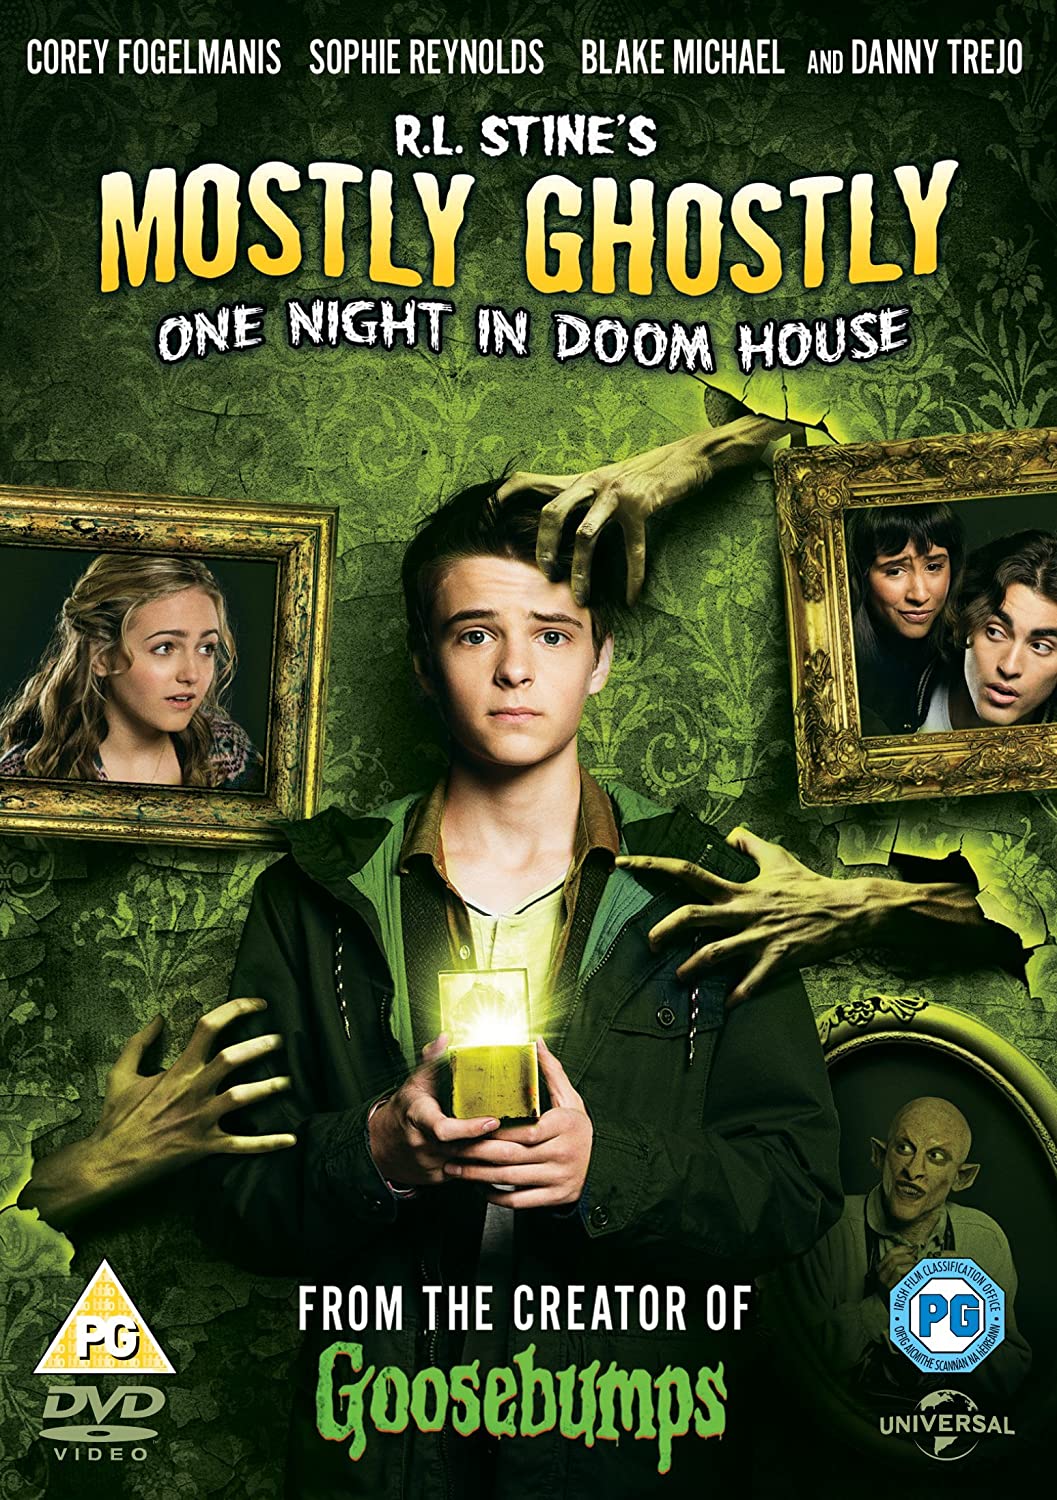 R.L. Stine's Mostly Ghostly - One Night In Doom House - Fantasy/Horror [DVD]